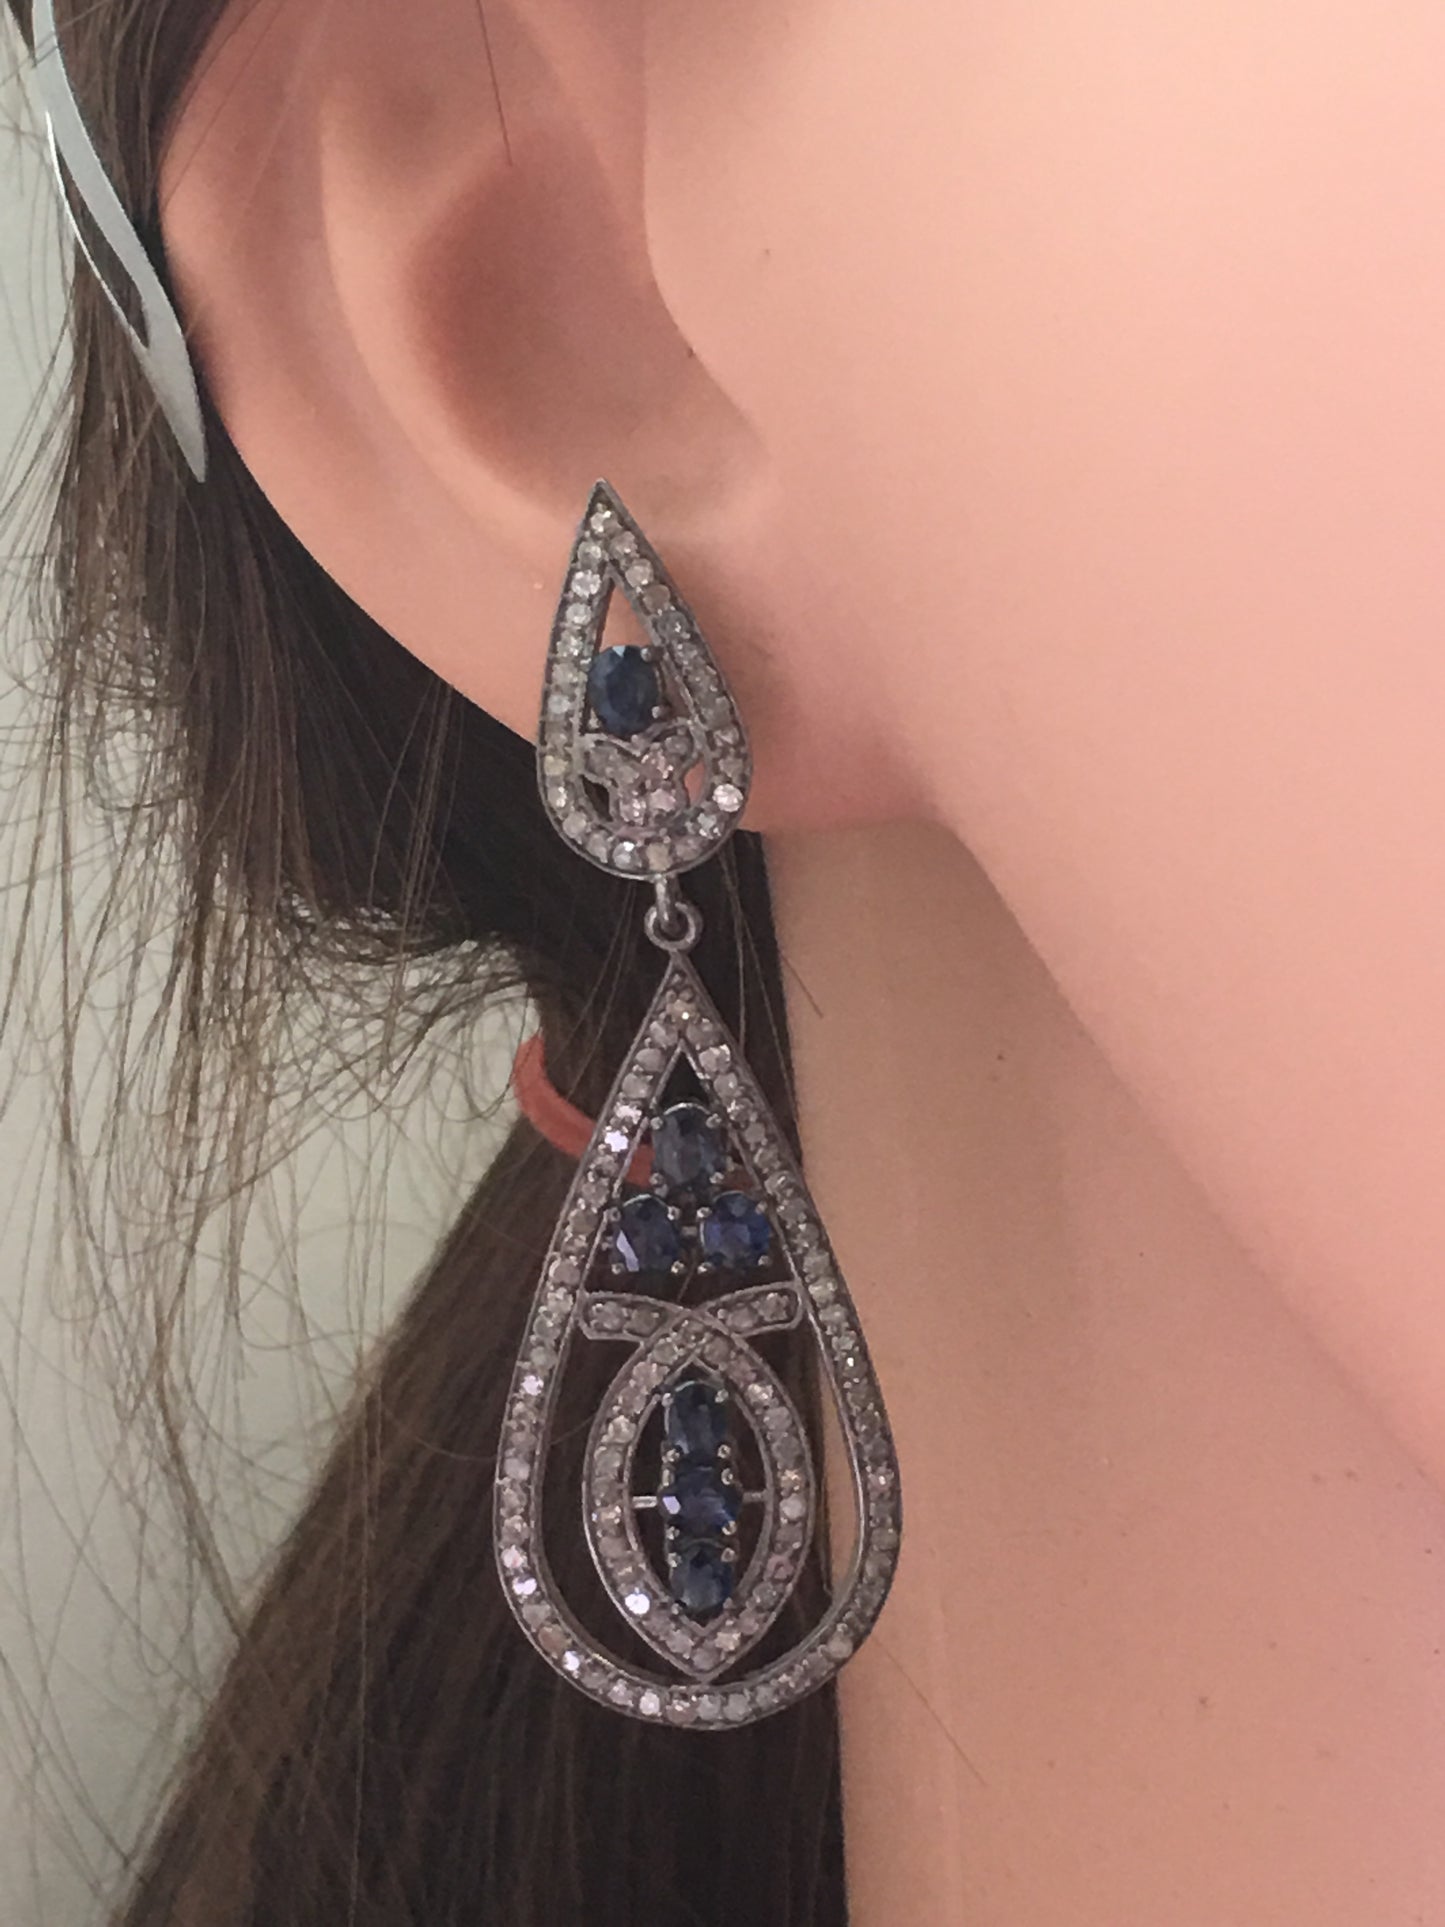 Diamond and Blue Sapphire Earrings